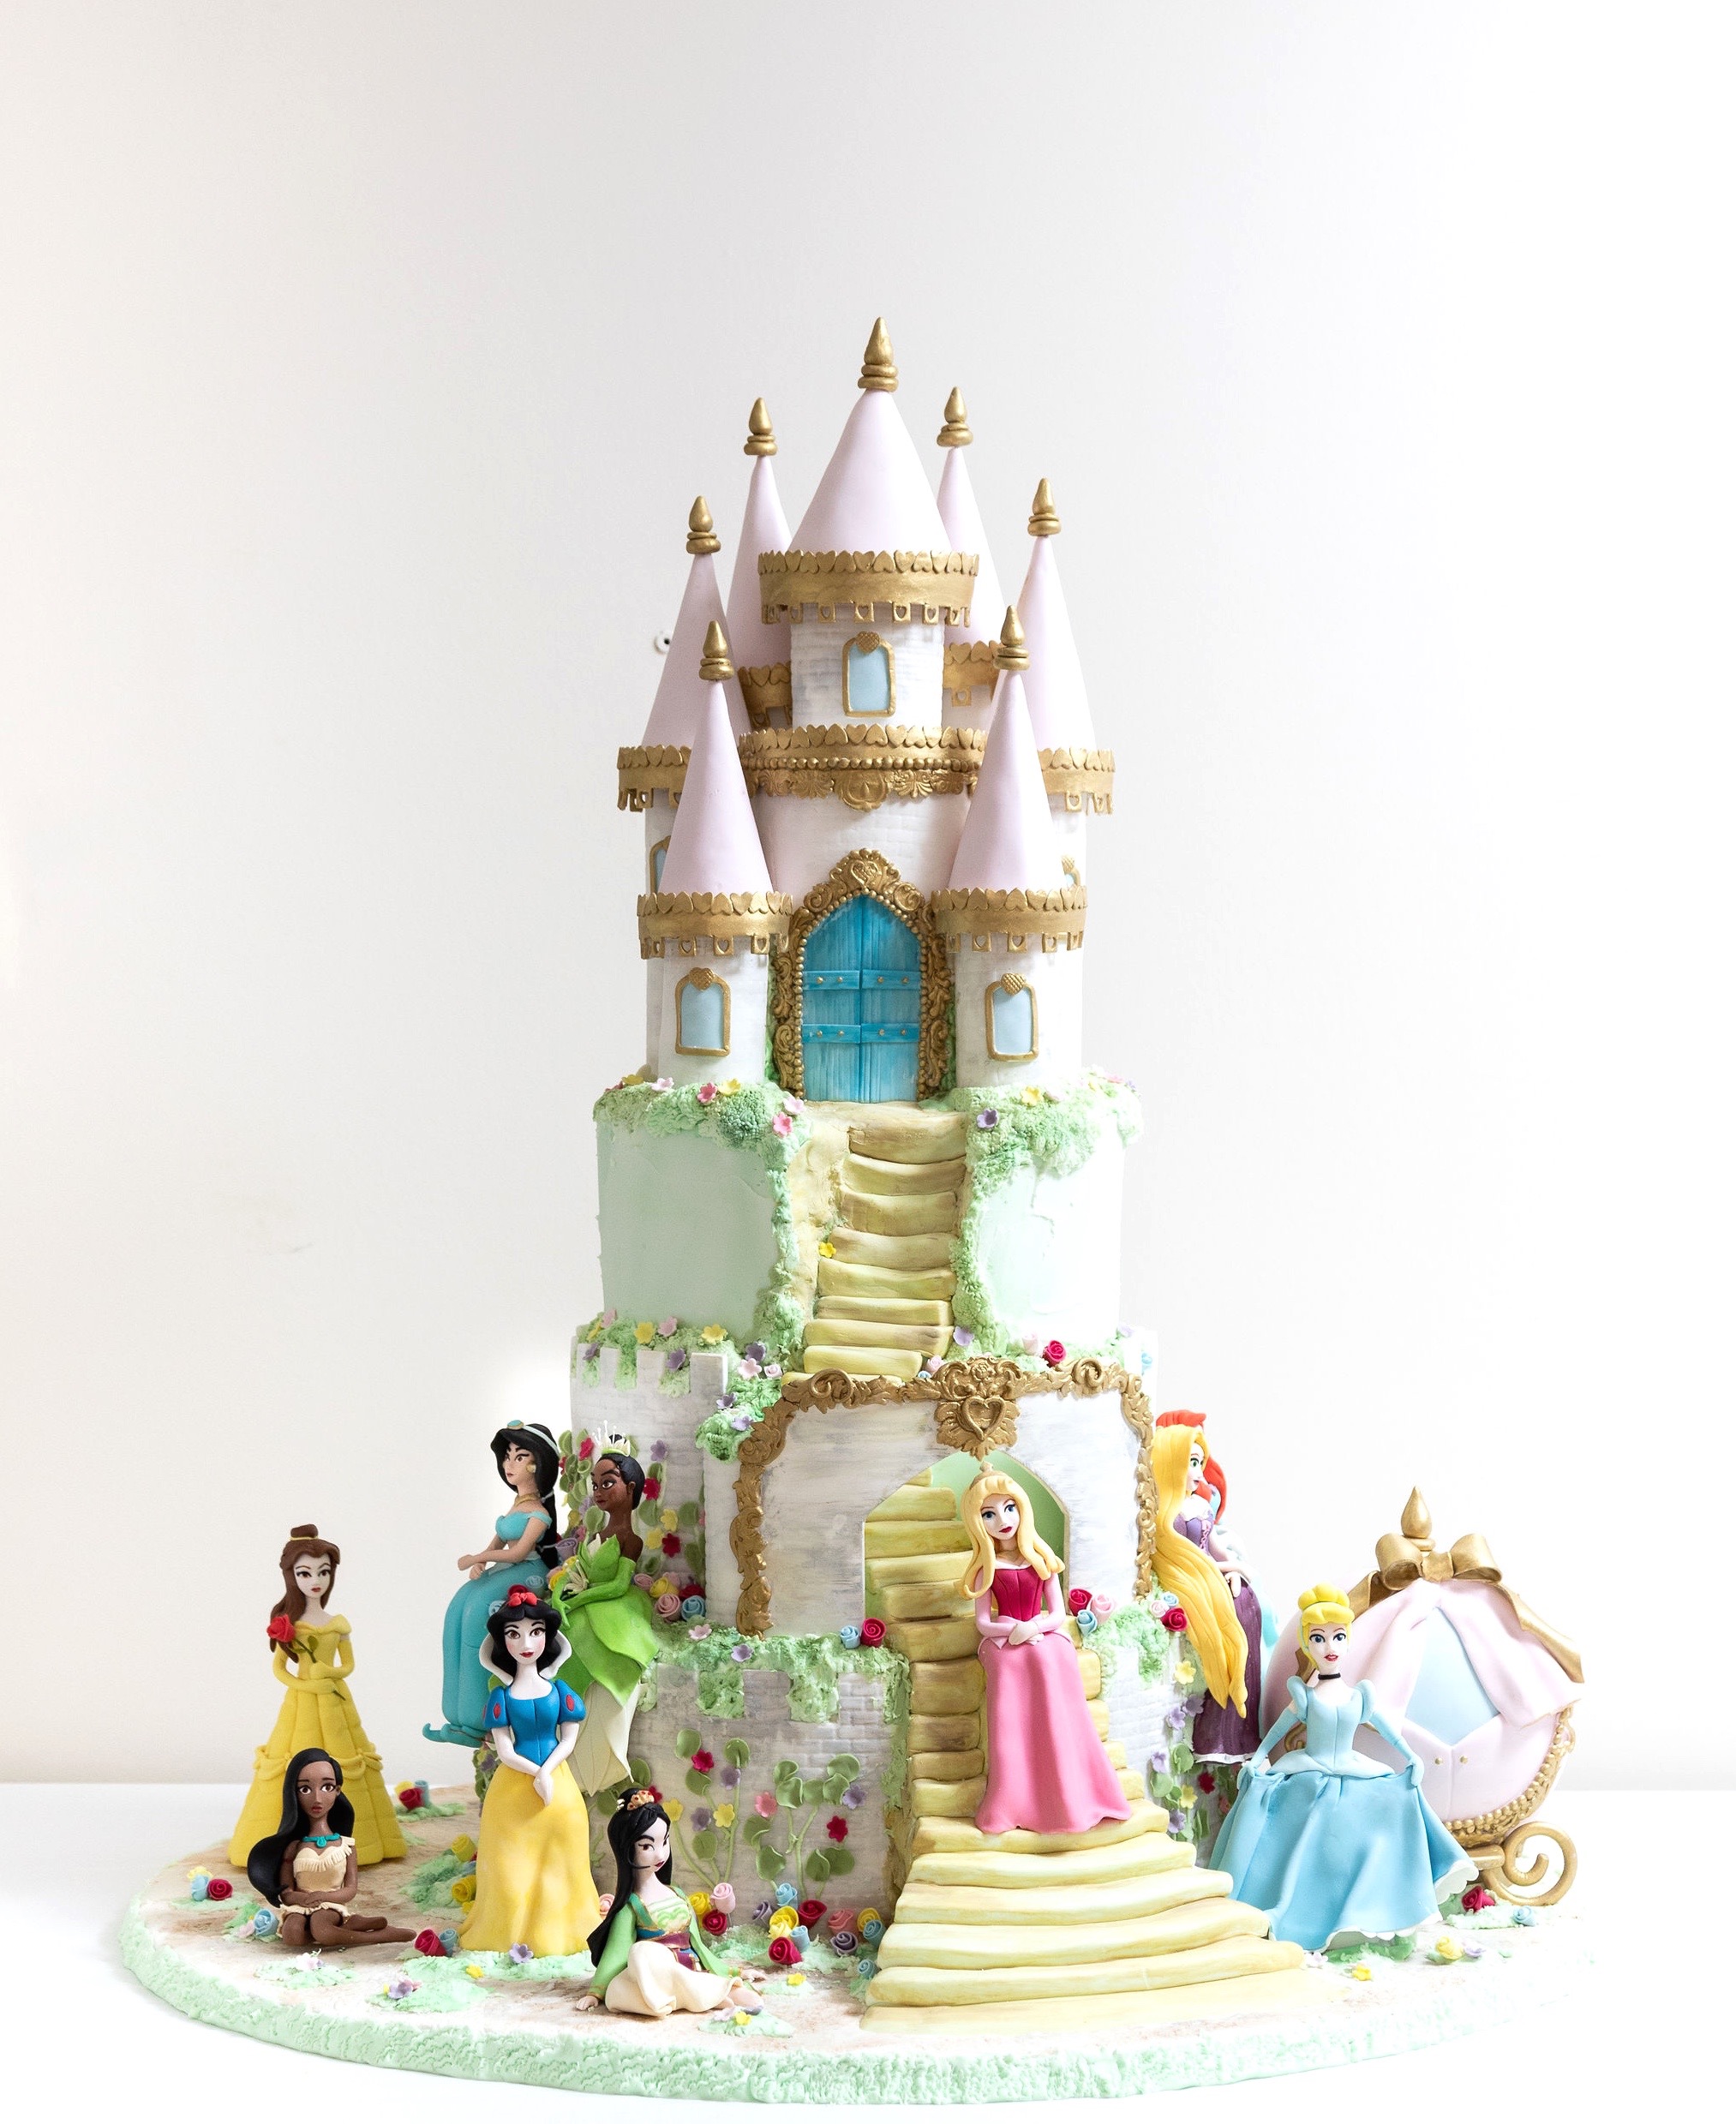 Amazing Princess Fairytale Cake!